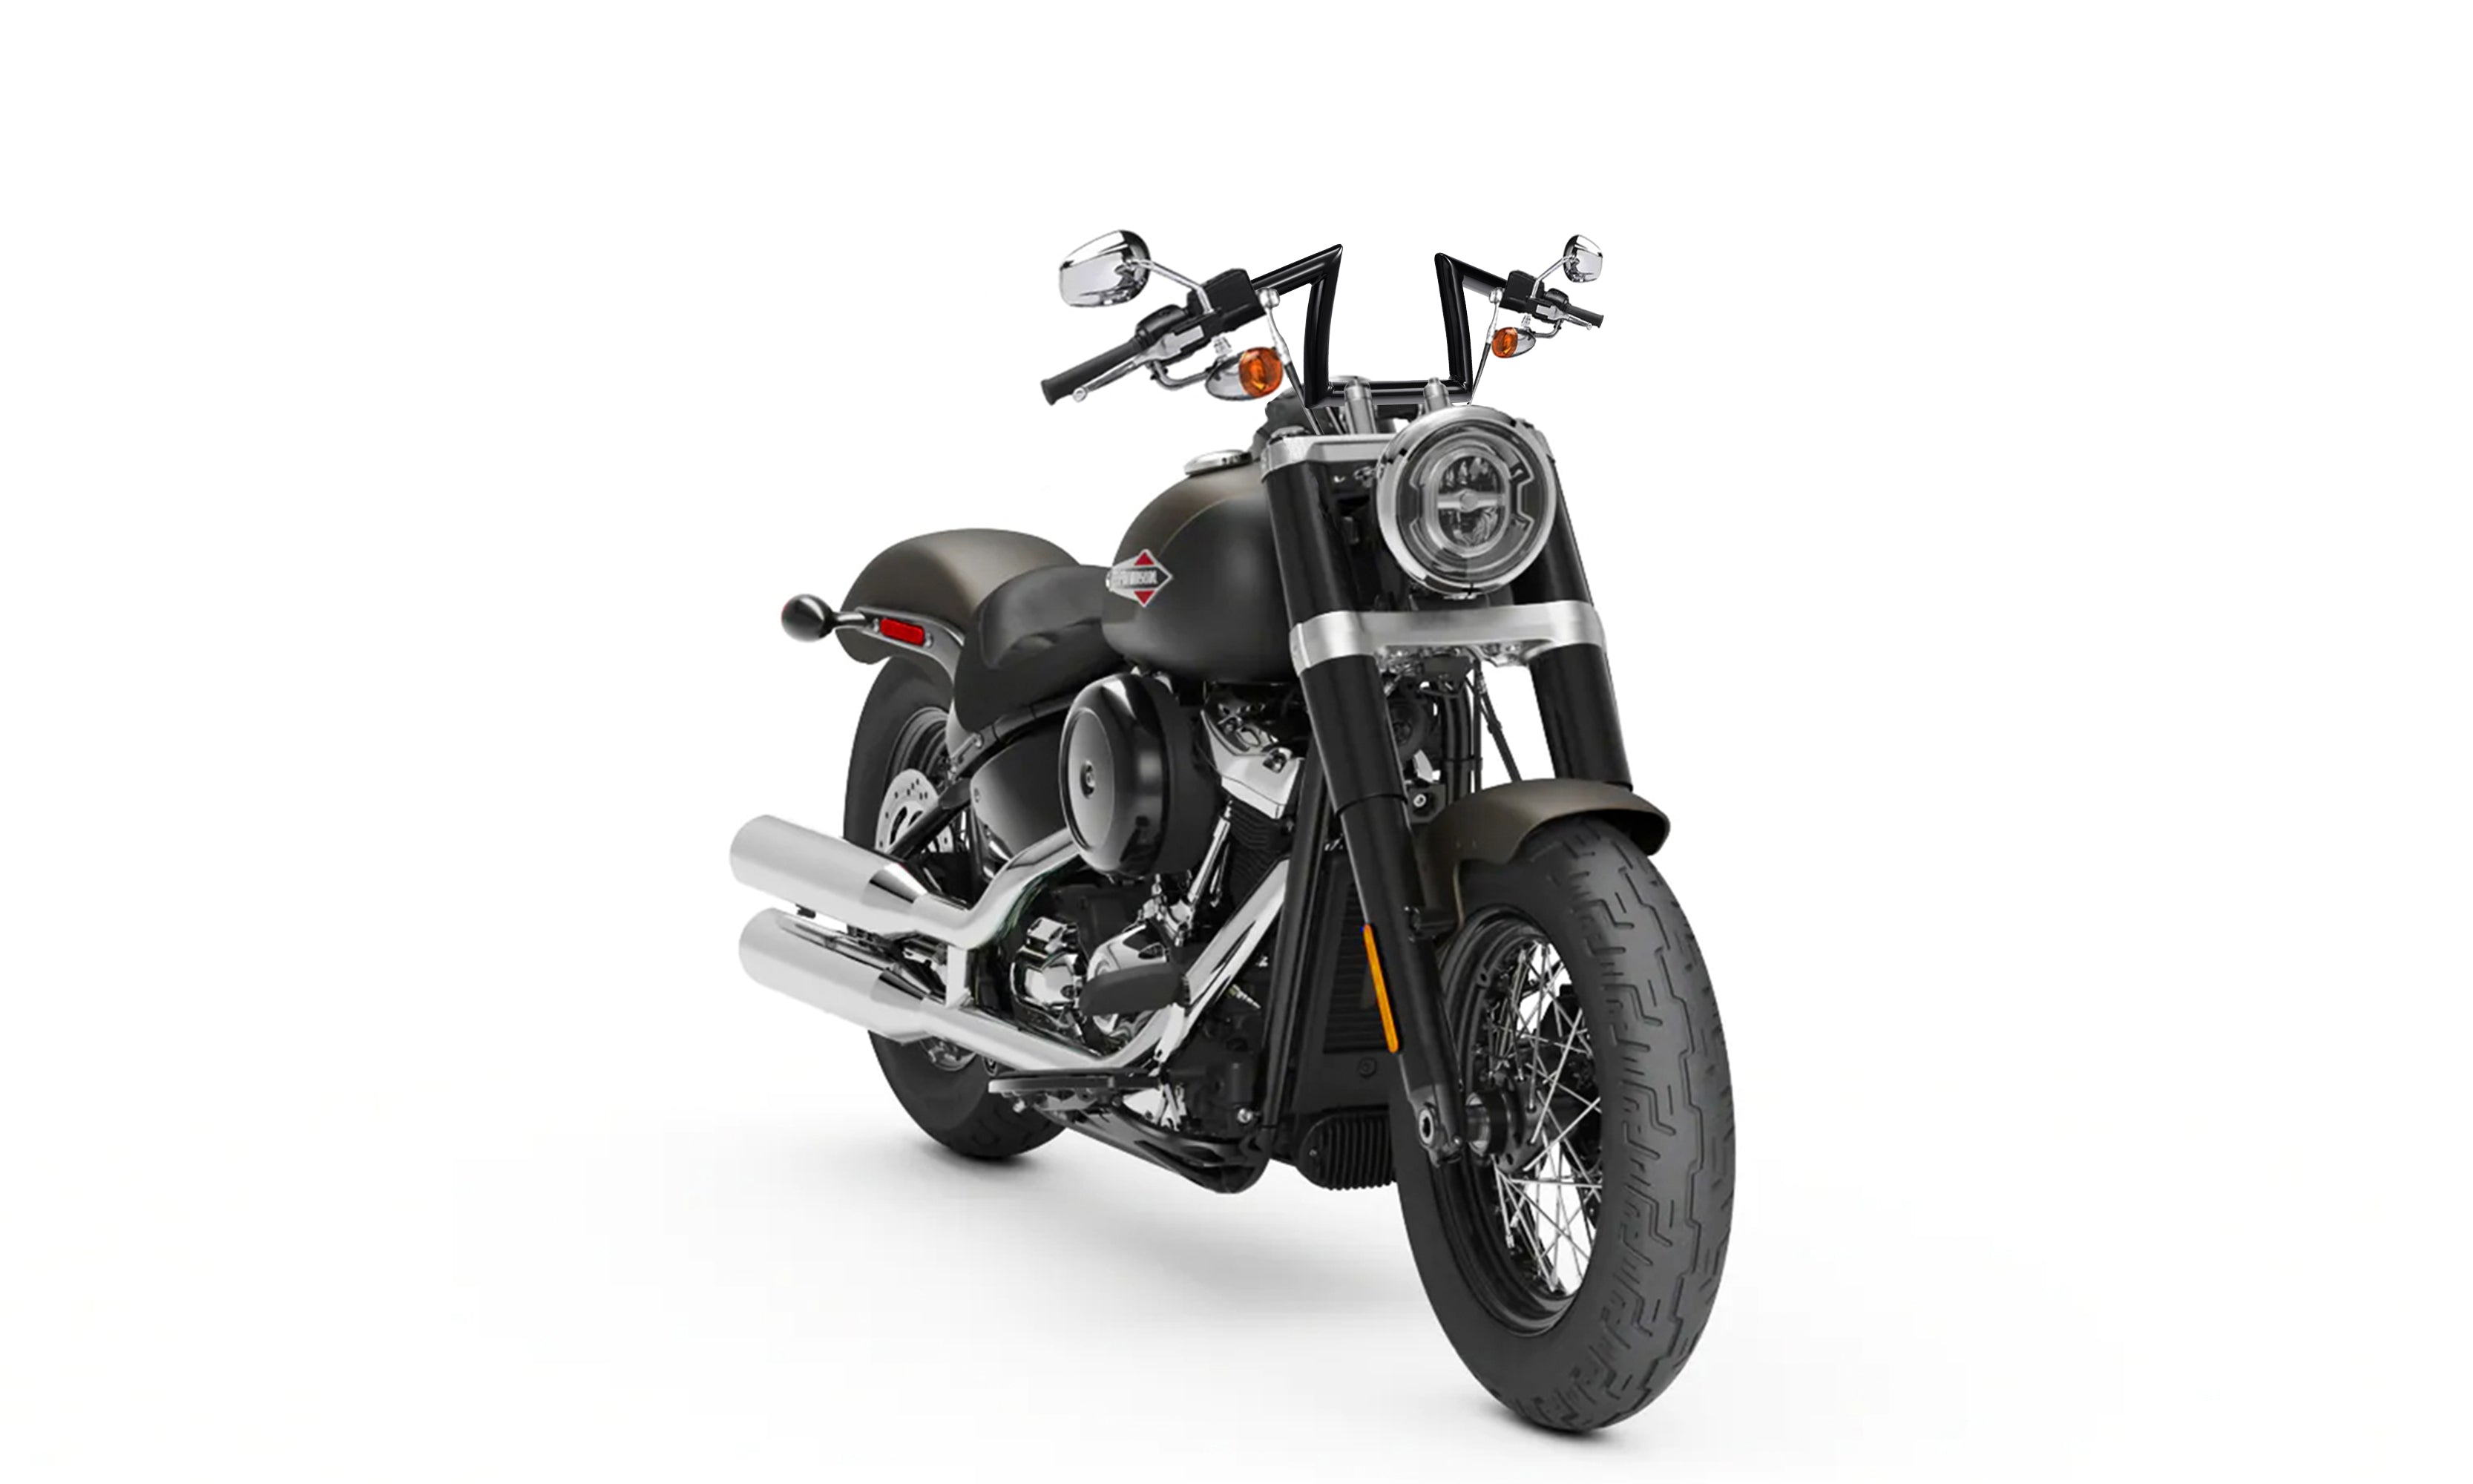 Viking Iron Born Z Handlebar For Harley Softail Slim FLS Gloss Black Bag on Bike View @expand